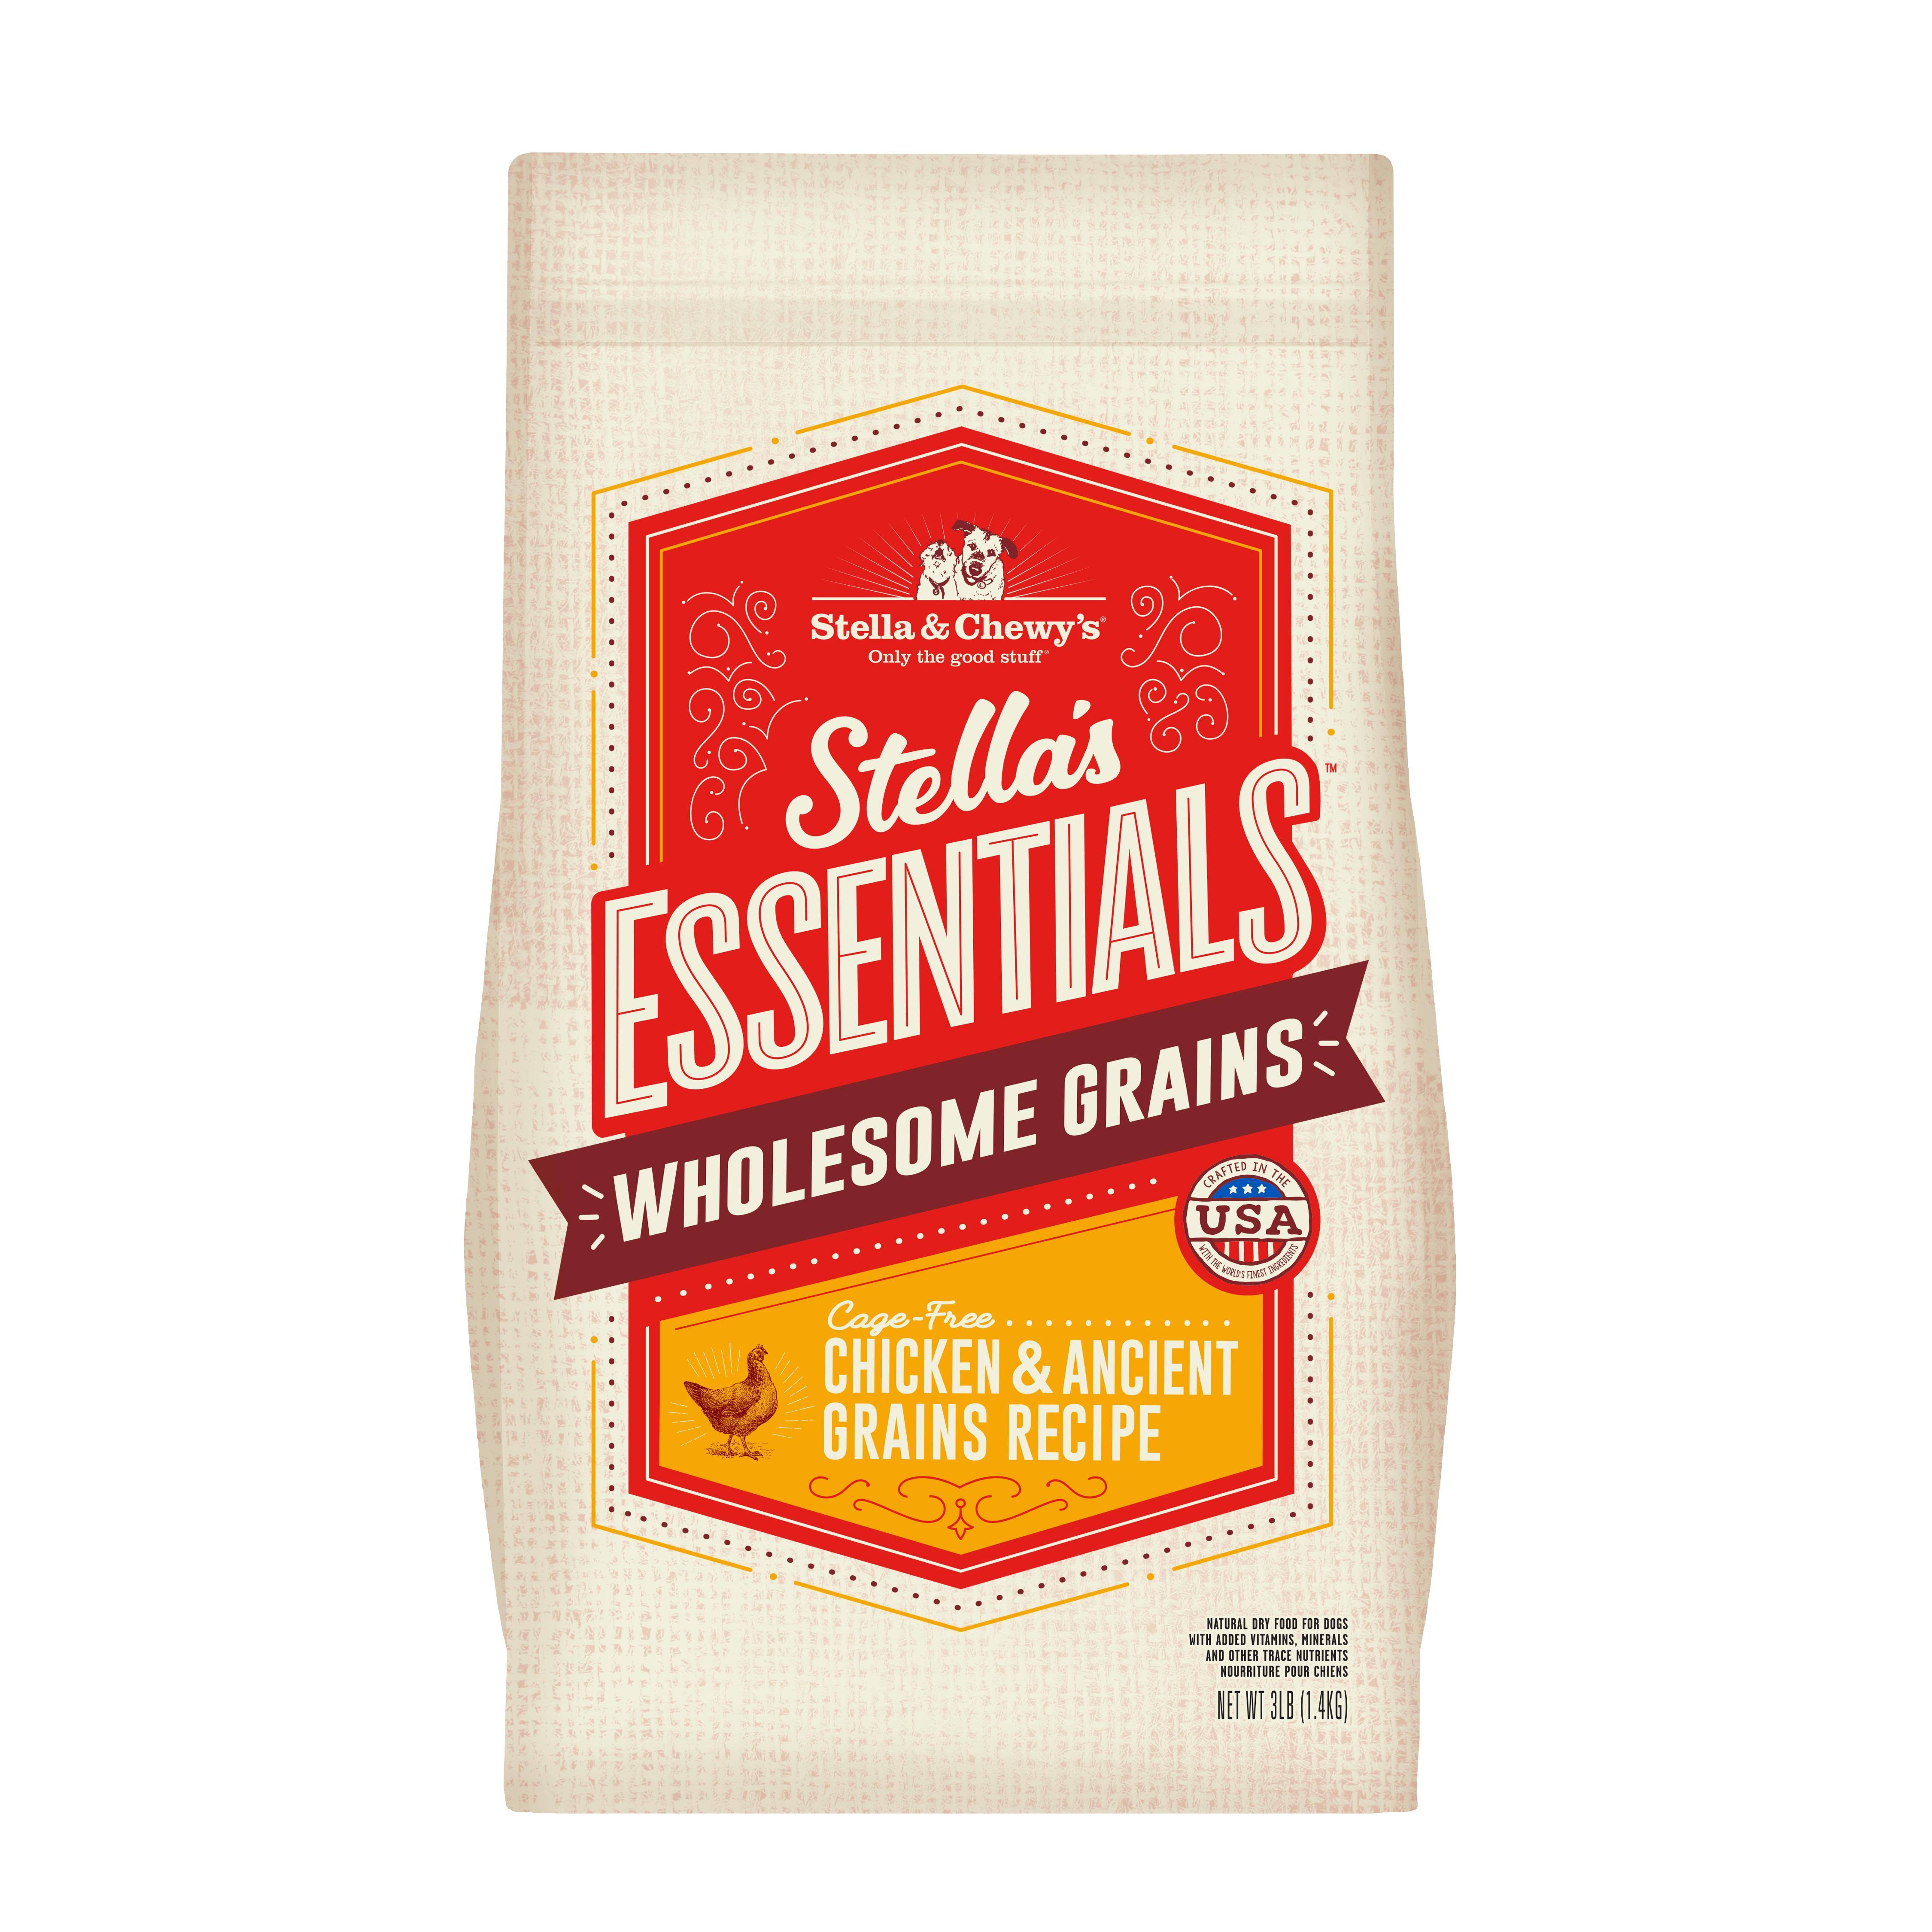 Stella & Chewy's Essentials Wholesome Grains - Chicken & Ancient Grains Dog Food